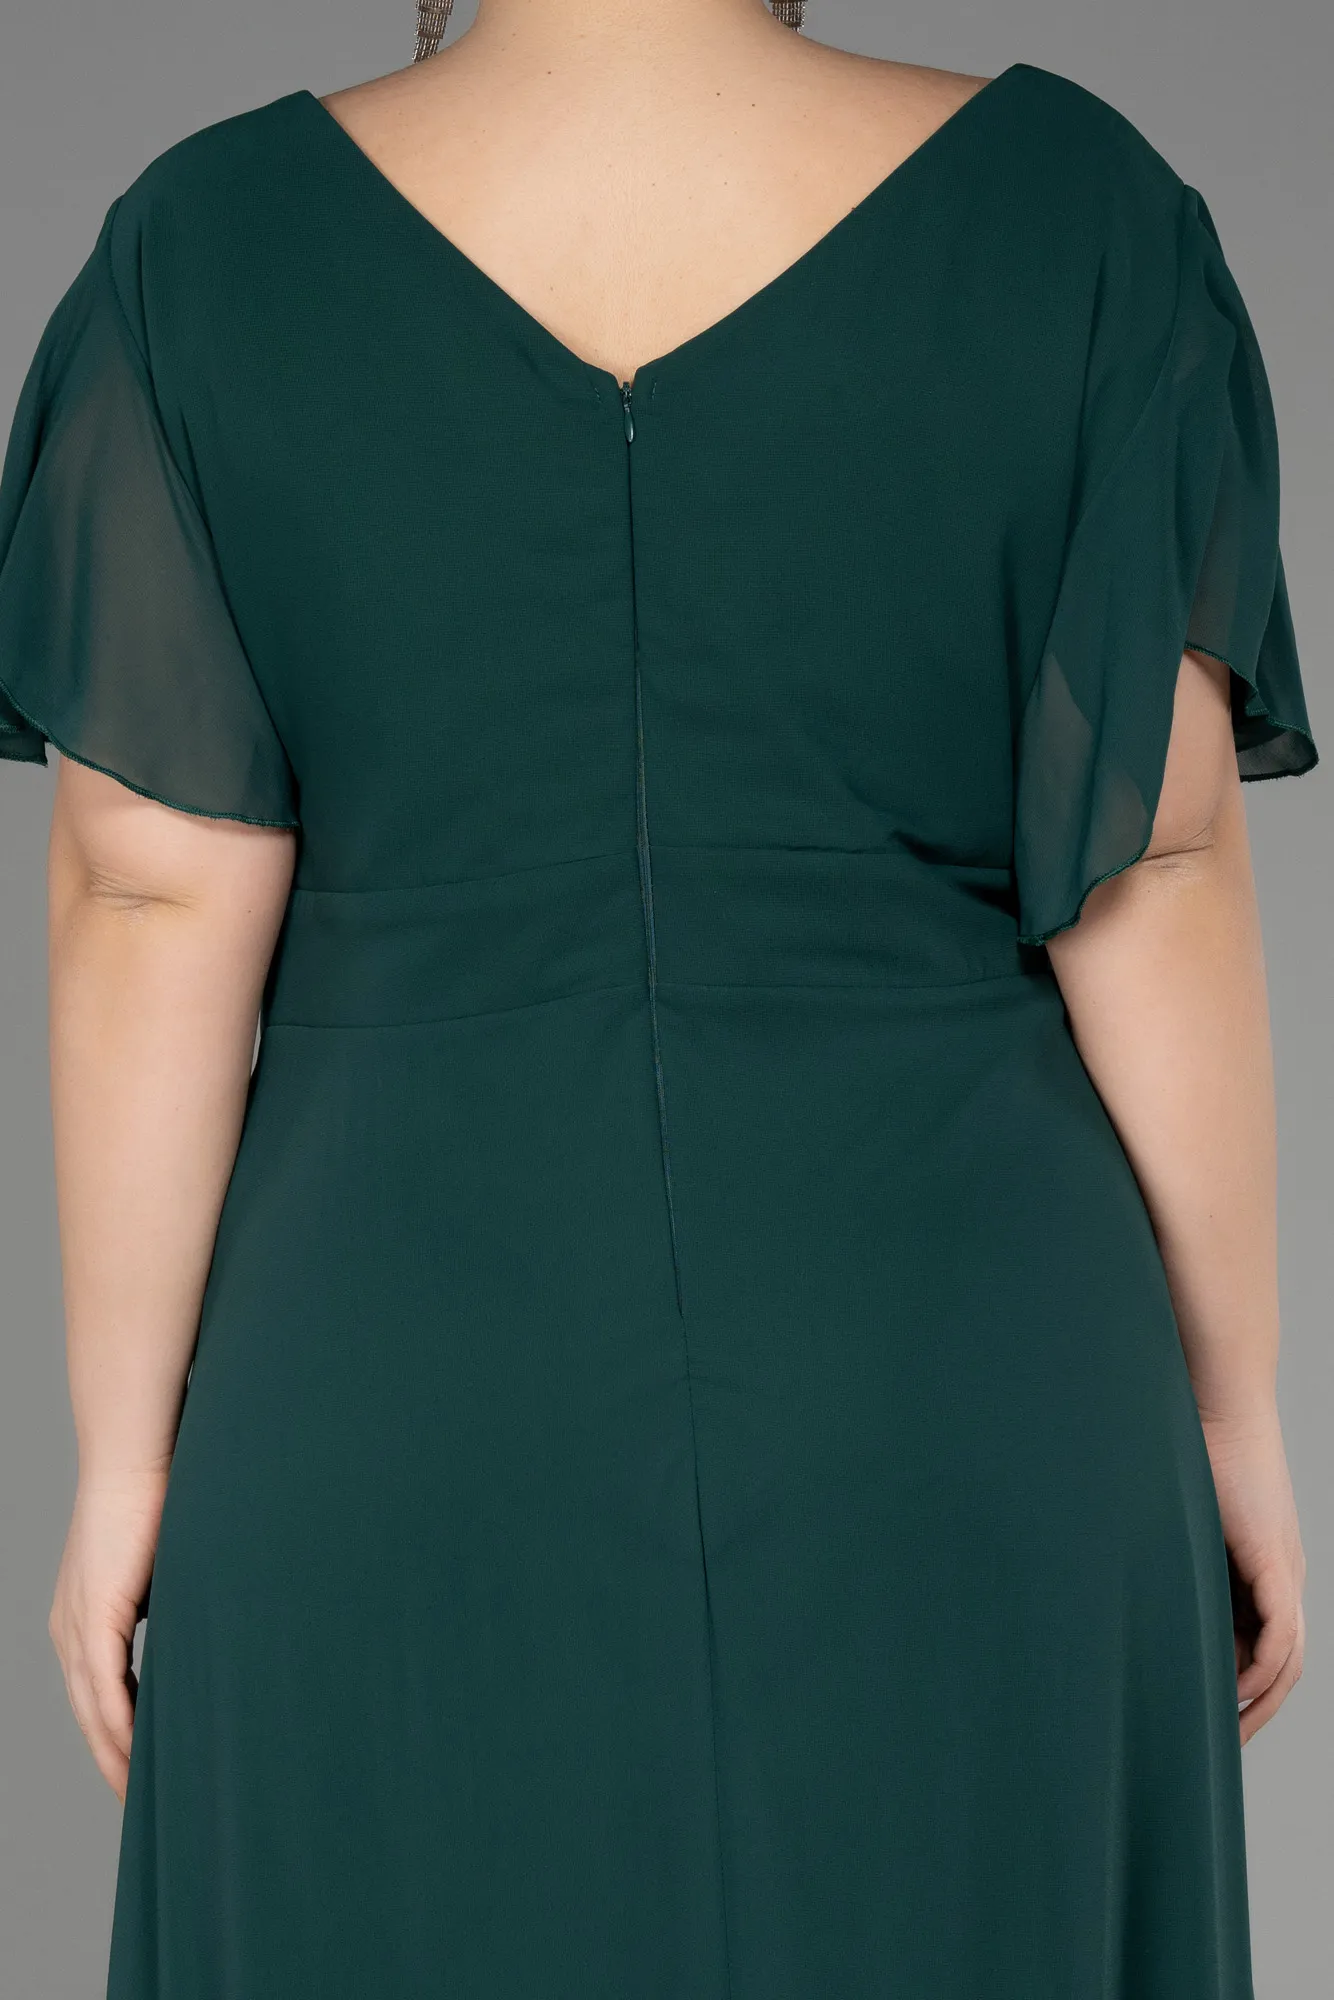 Emerald Green-Long Chiffon Plus Size Evening Dress ABU2308